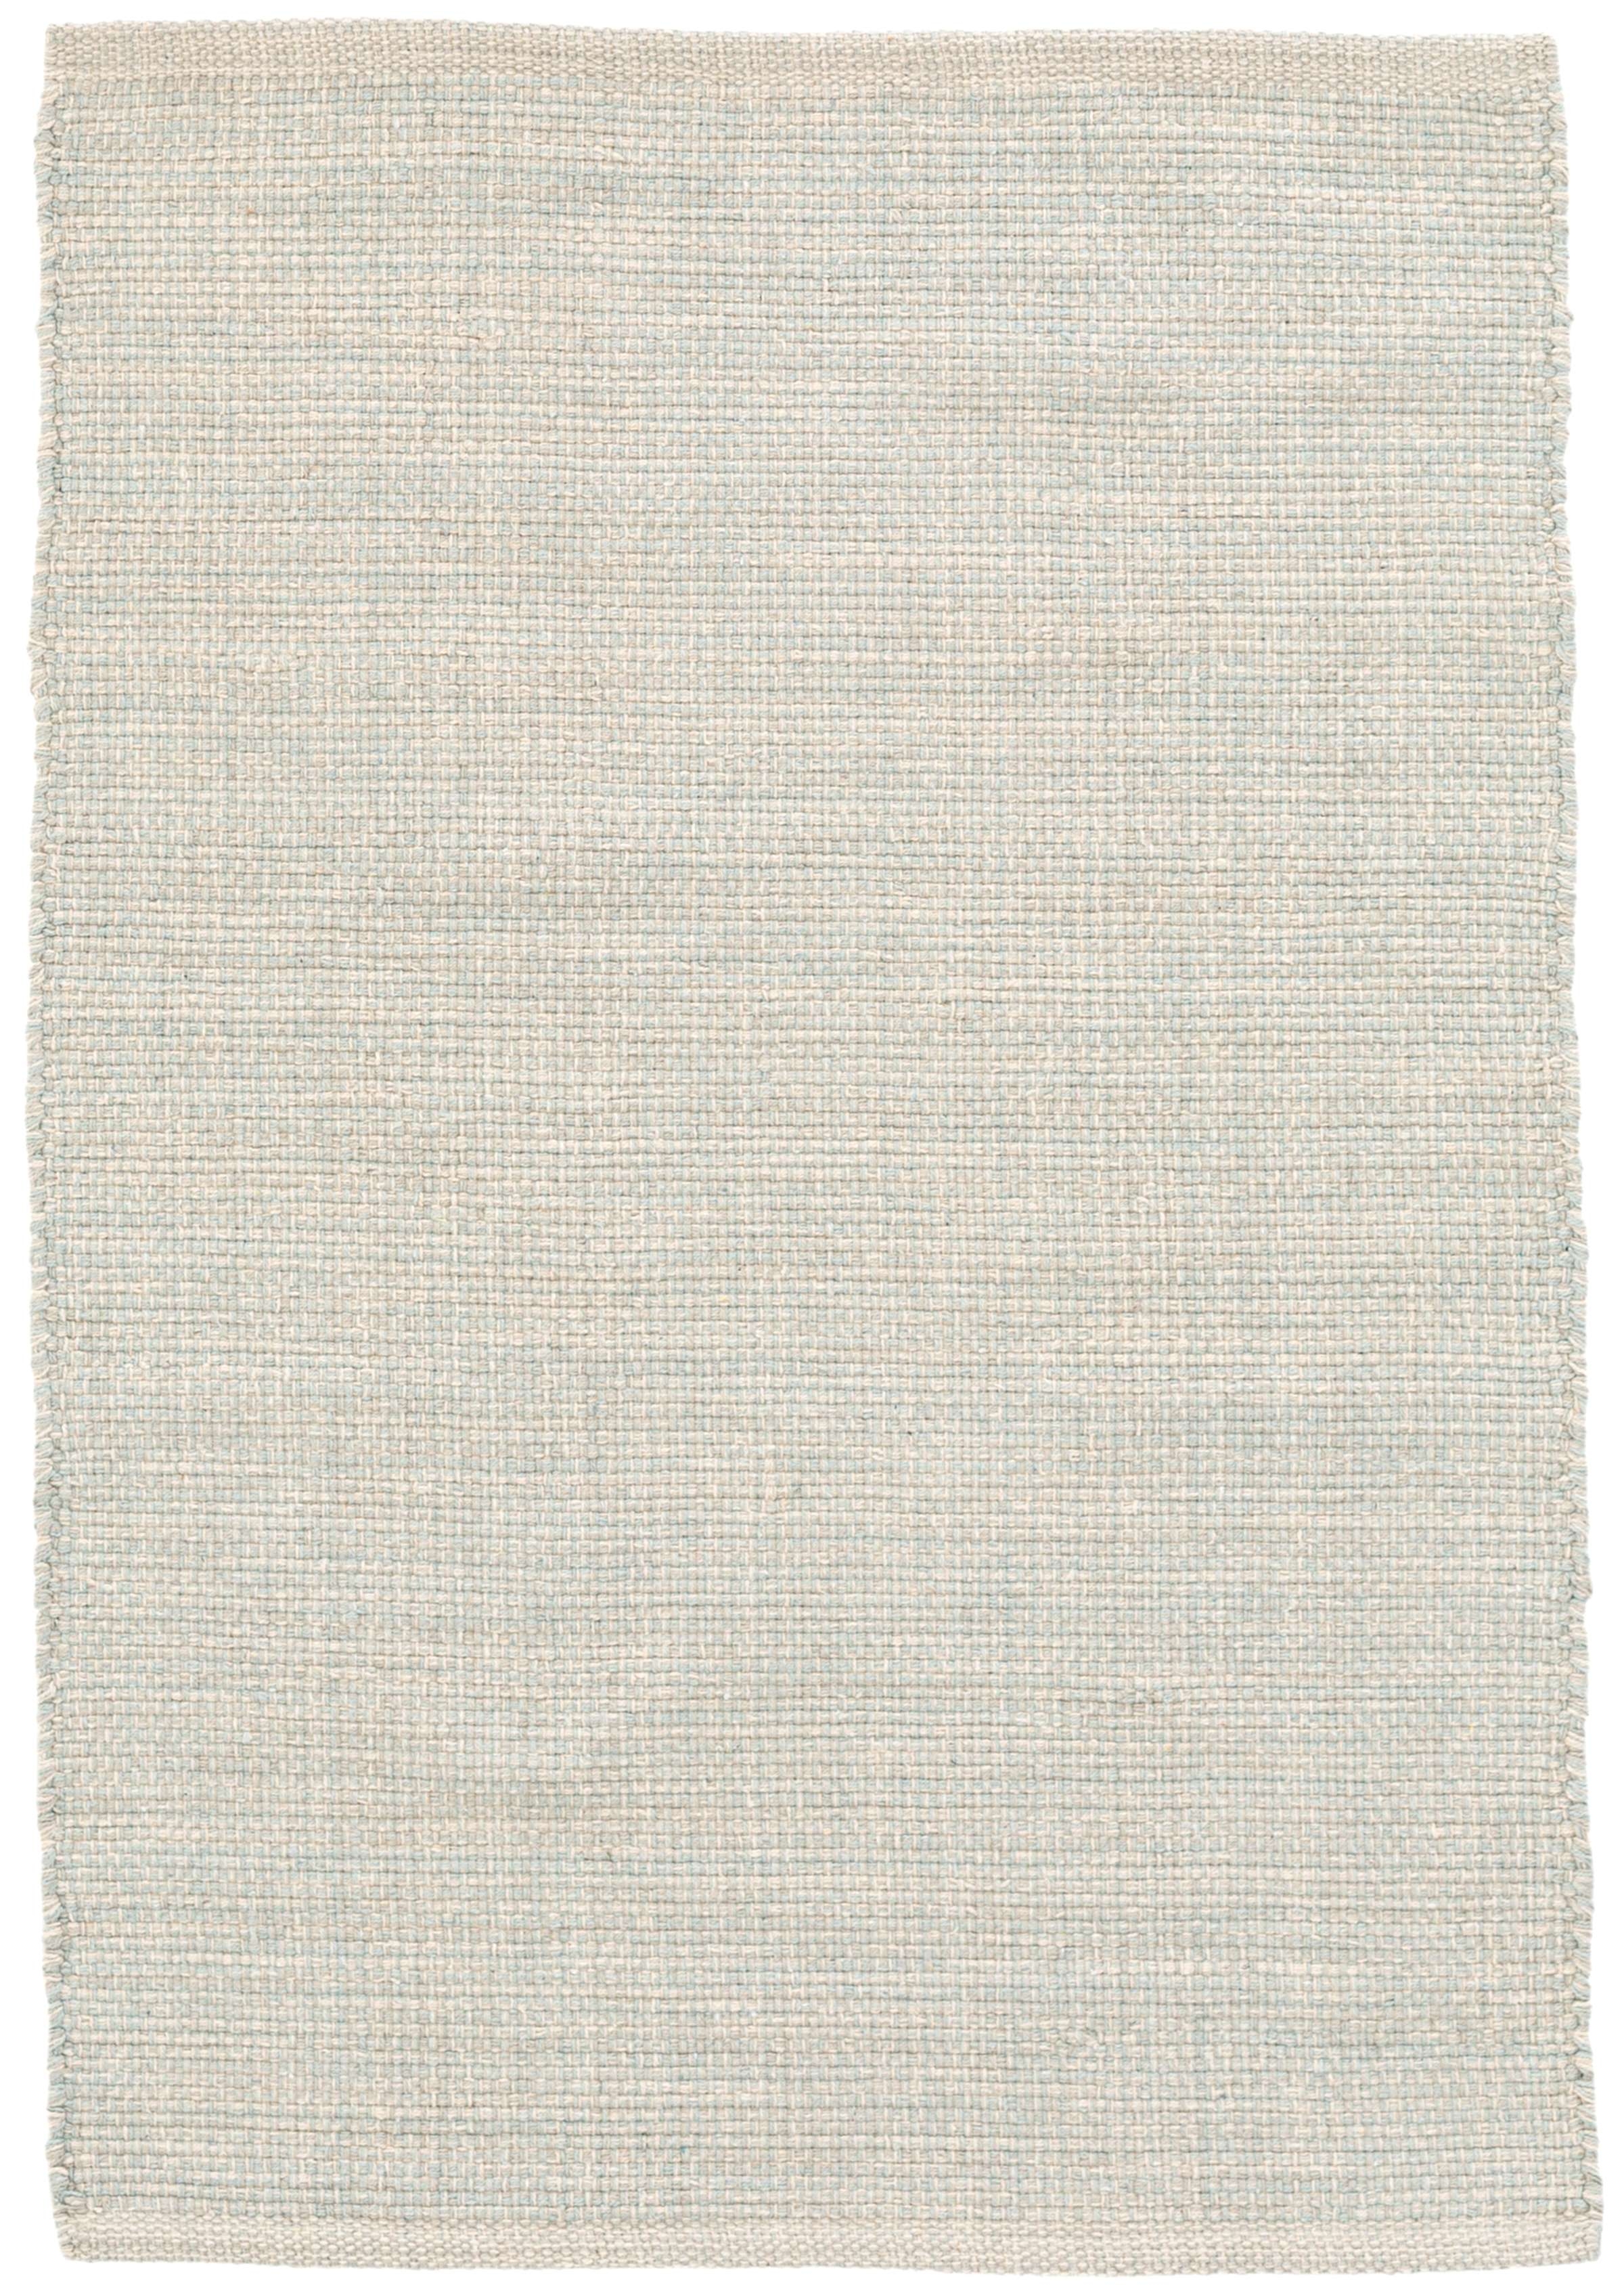 Marled Light Blue Handwoven Cotton Rug - Image 0